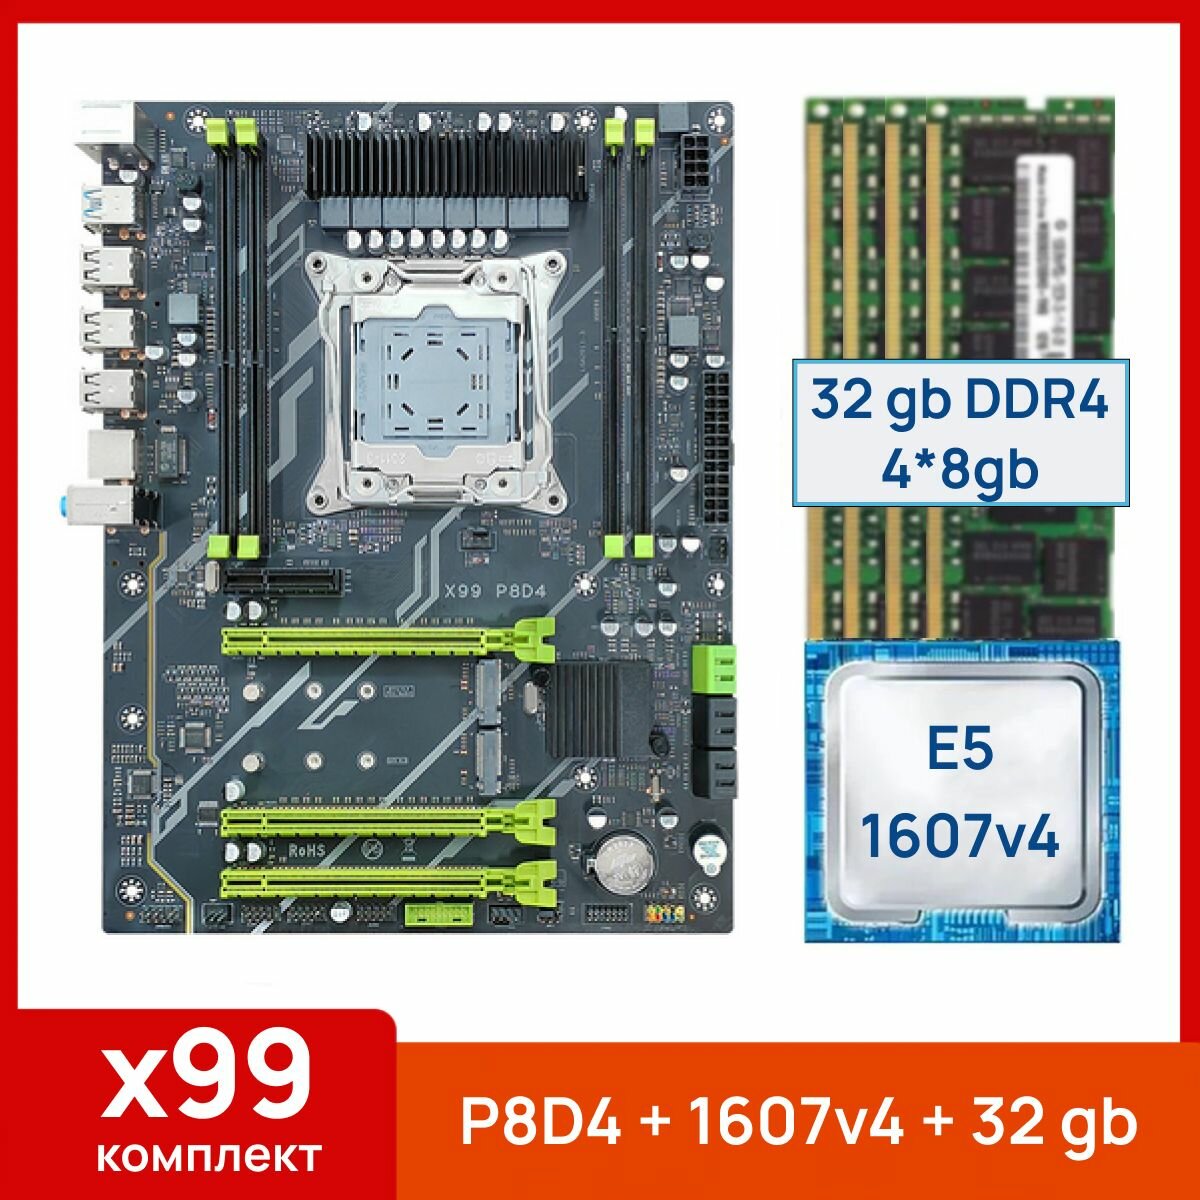 Комплект: Atermiter X99 P8D4 + Xeon E5 1607v4 + 32 gb (4x8gb) DDR4 ecc reg